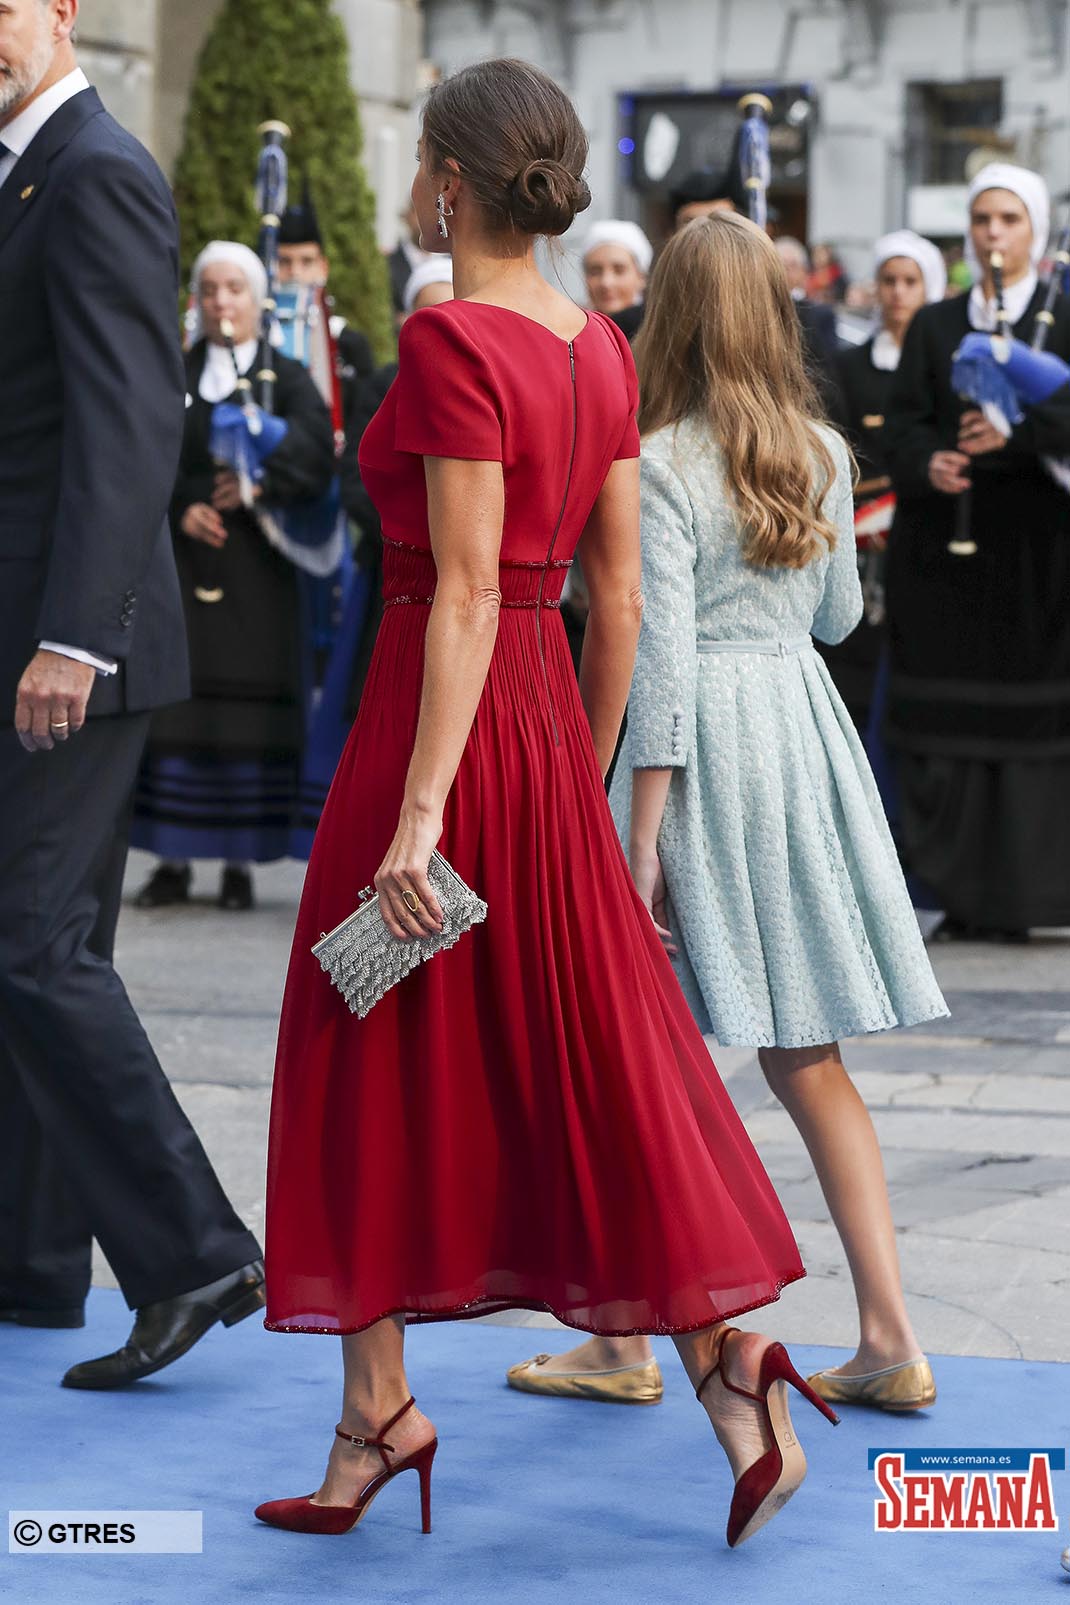 Spanish Queen Letizia Ortiz with daughter Princess of Asturias Leonor de Borbon arriving to Princess of Asturias Awards 2019 in Oviedo, on Friday 18 October 2019.